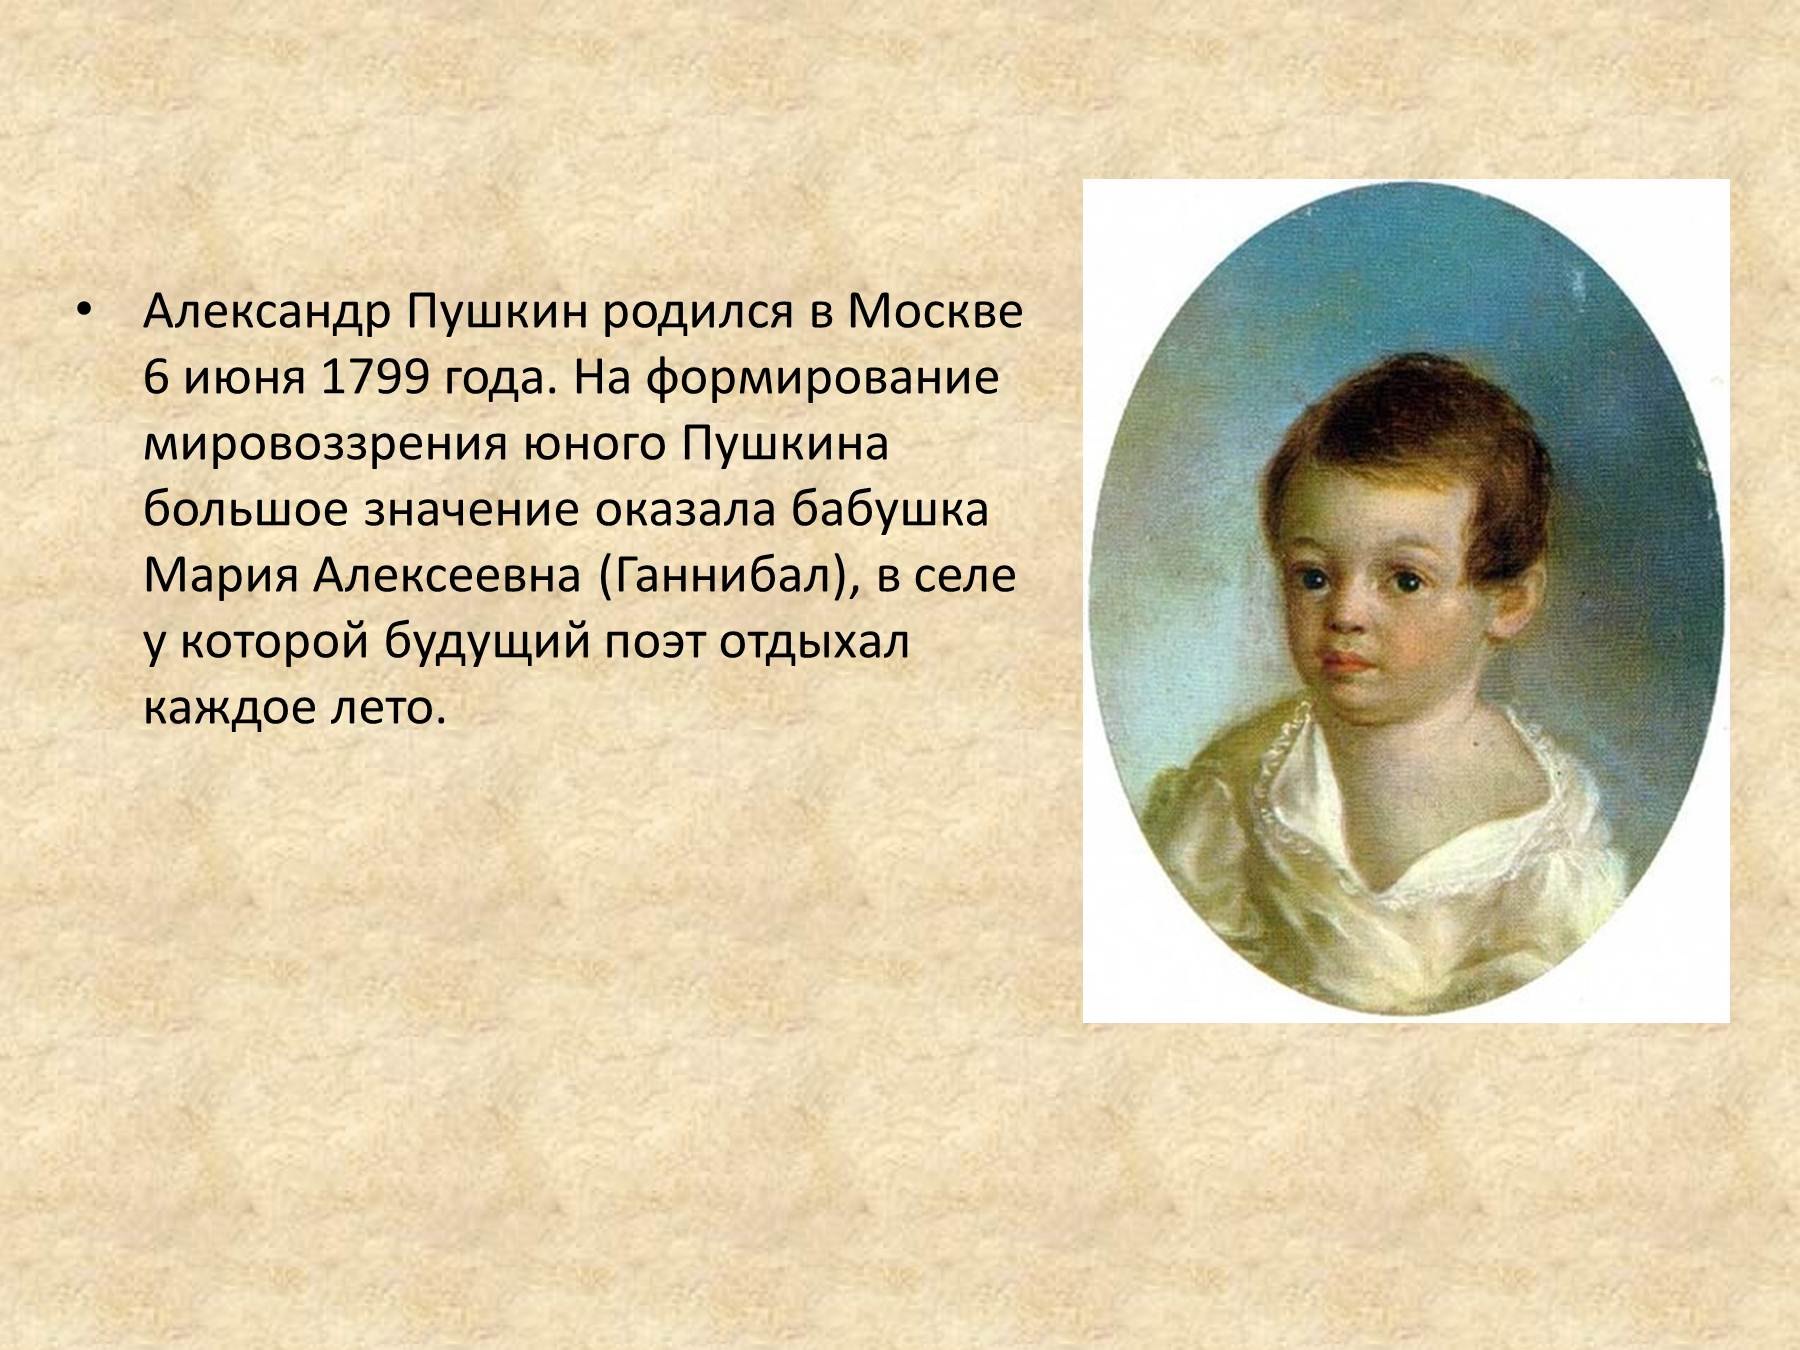 Саша Пушкин родился